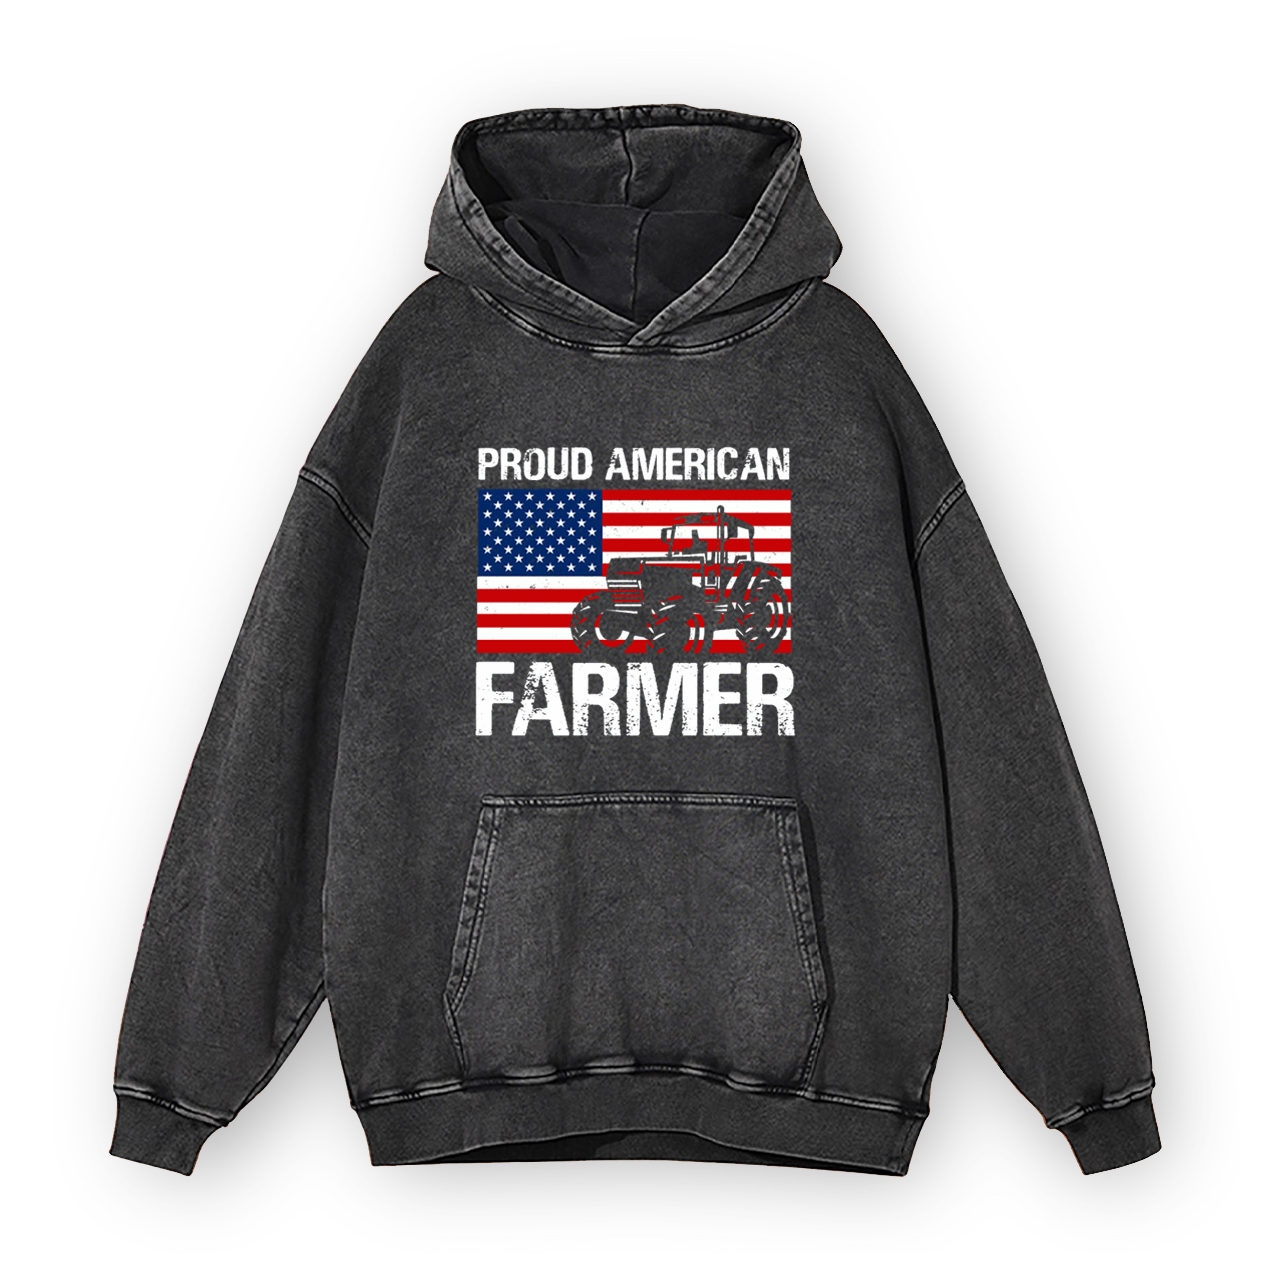 Proud American Farmer Tractor Garment-Dye Hoodies